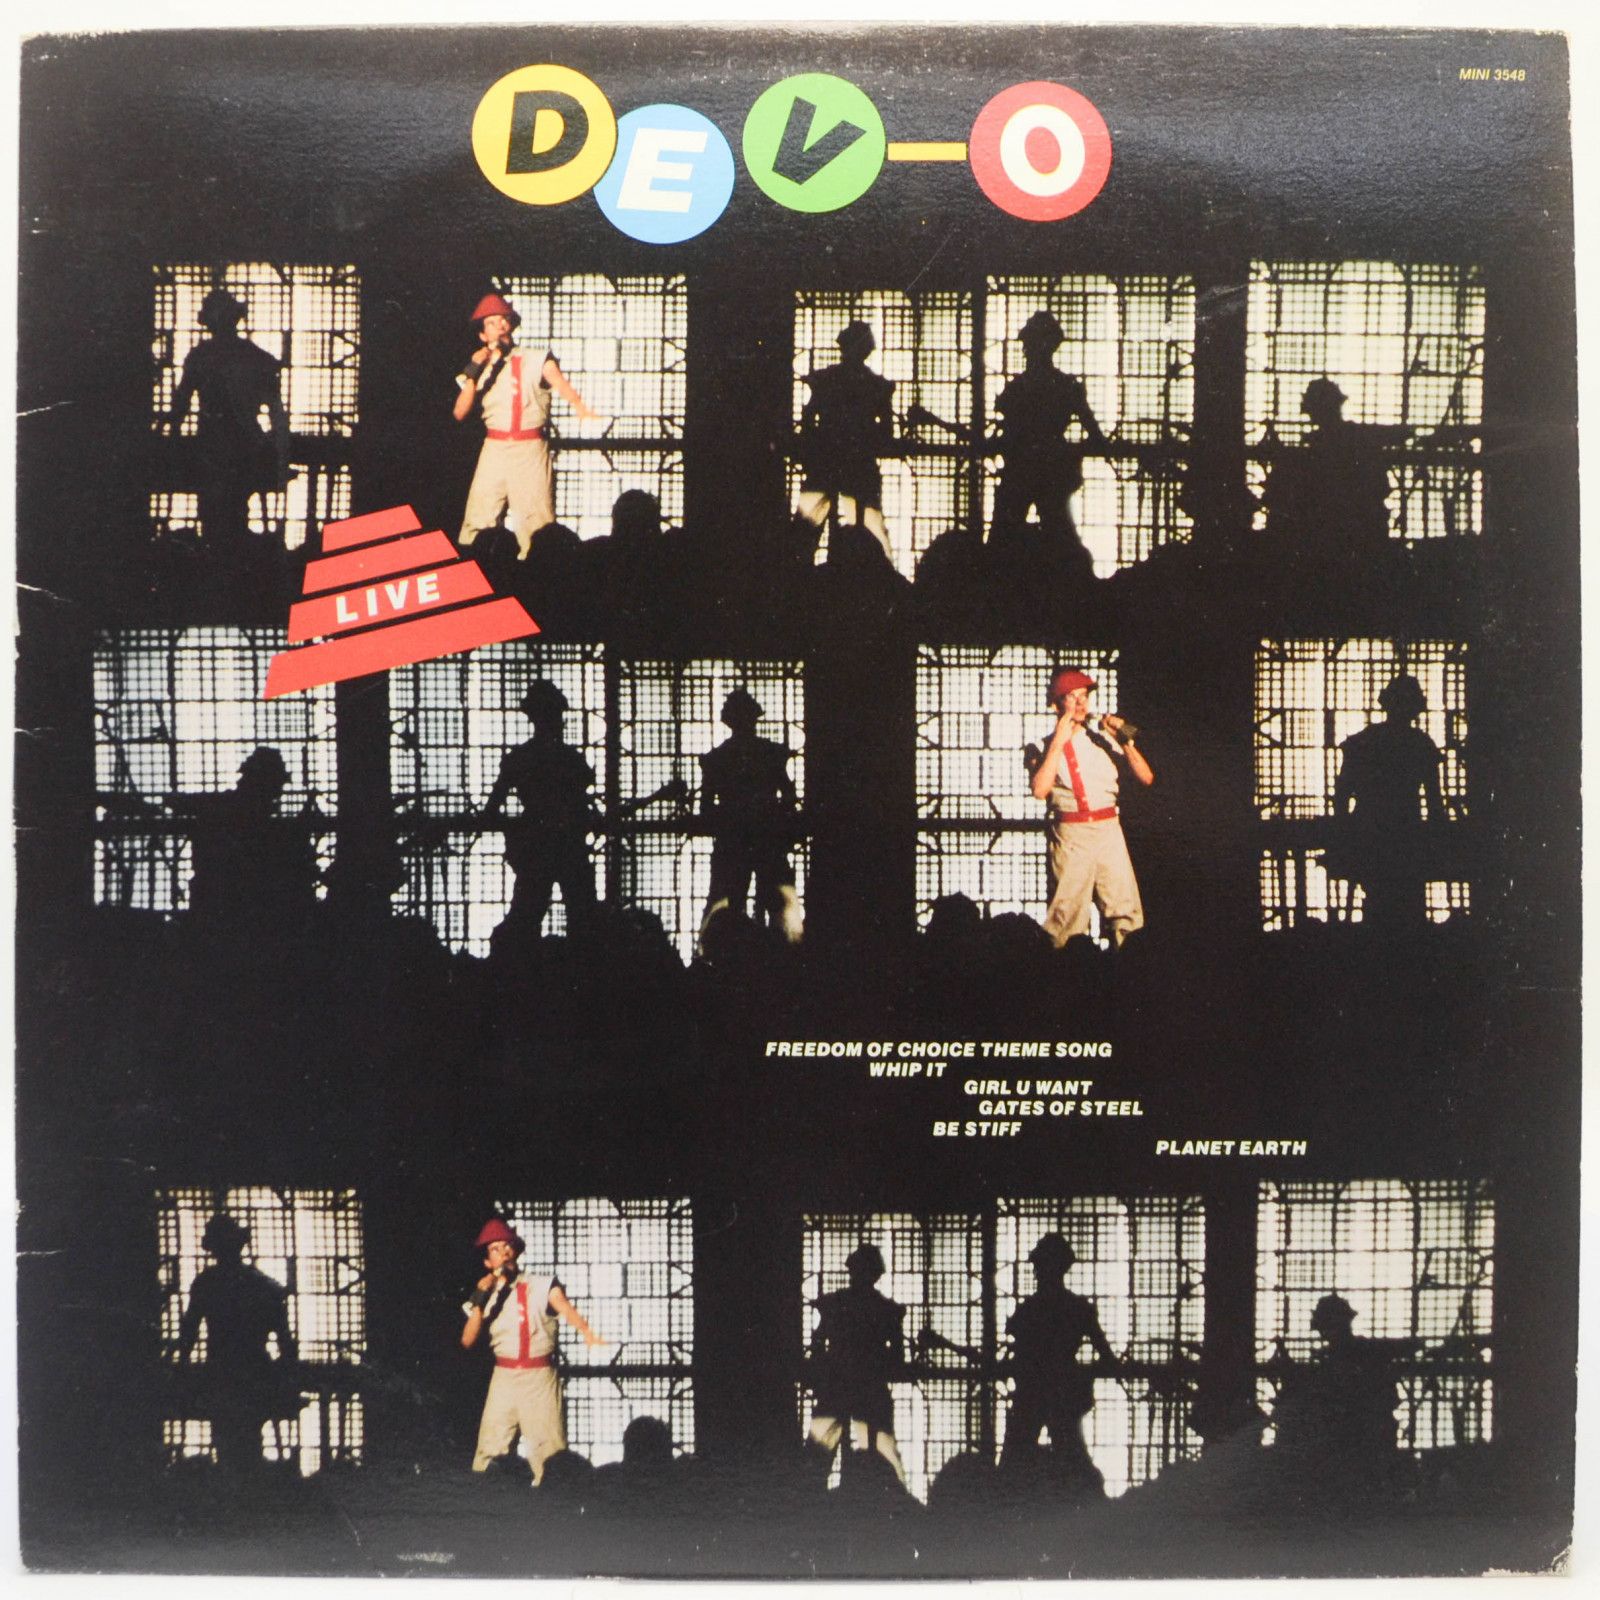 Devo — Dev-O Live, 1981